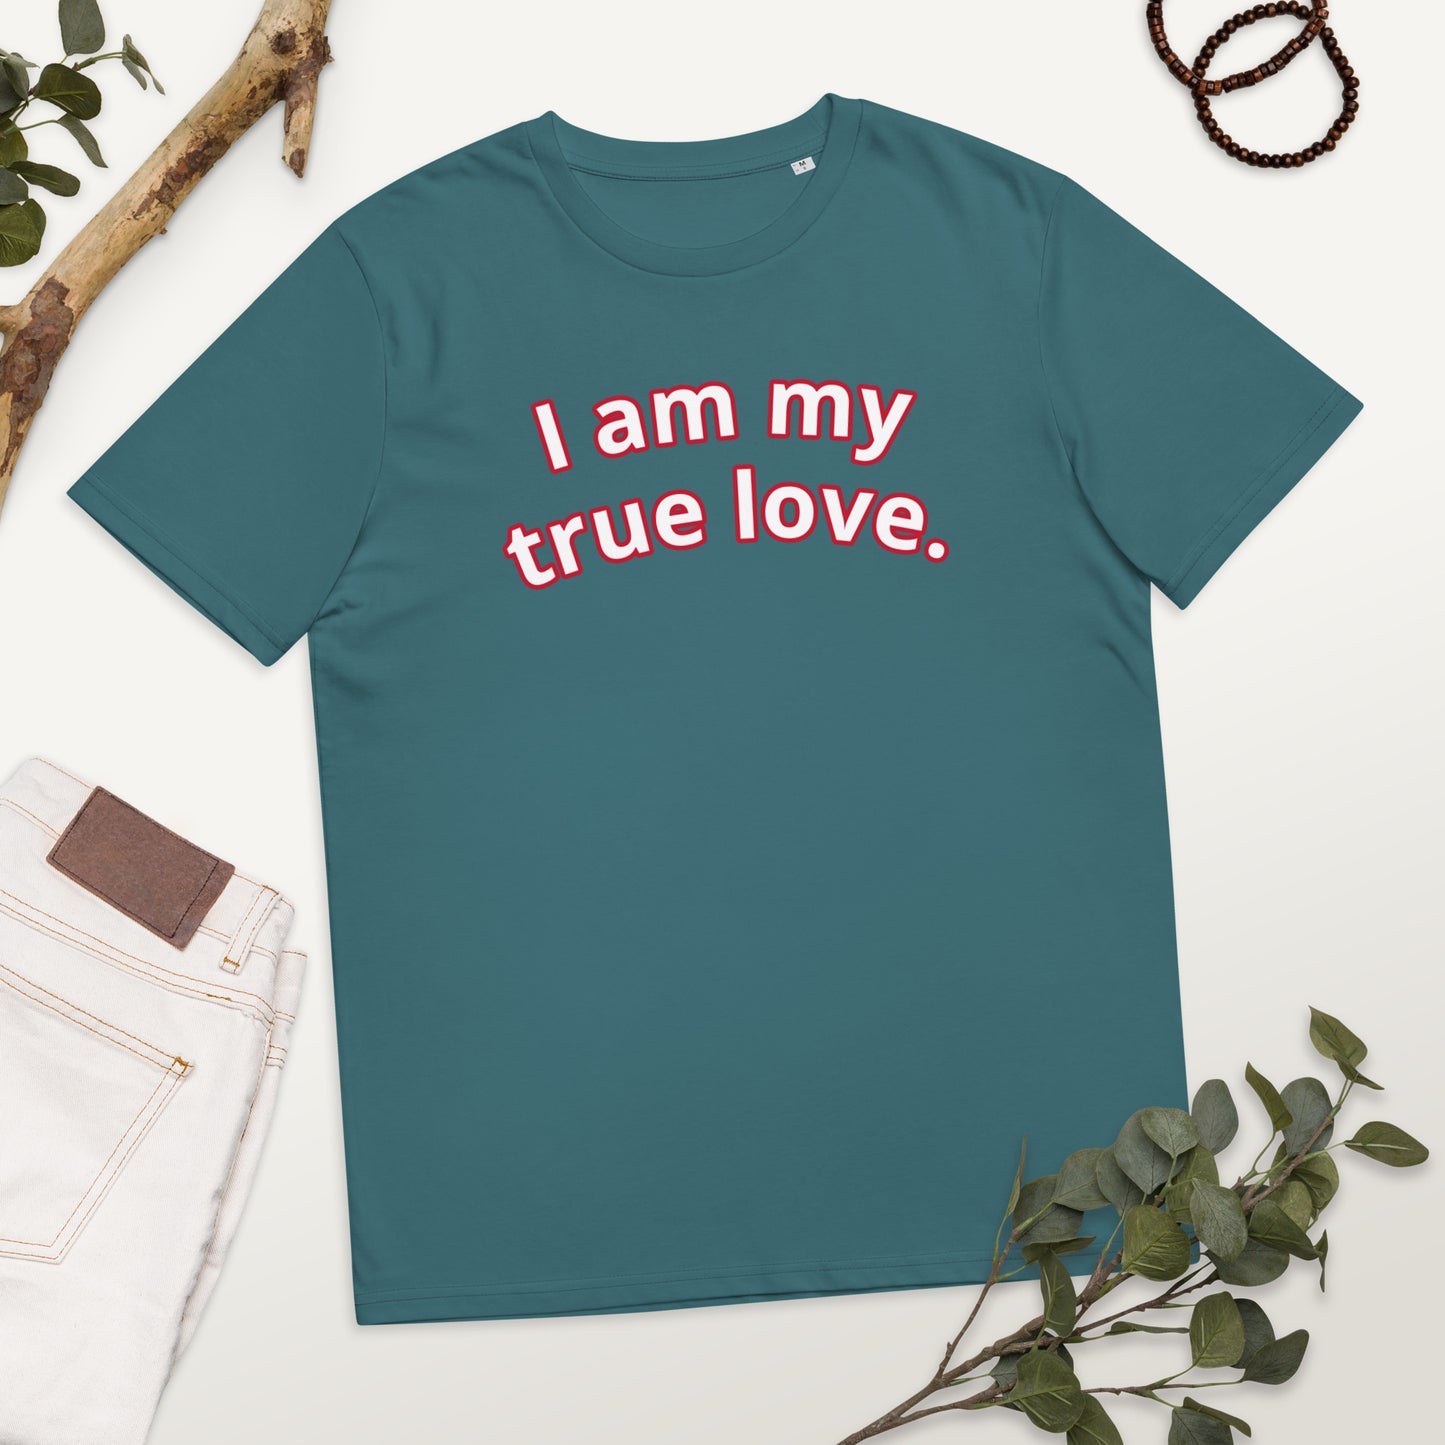 I am my true love. Unisex organic cotton t-shirt